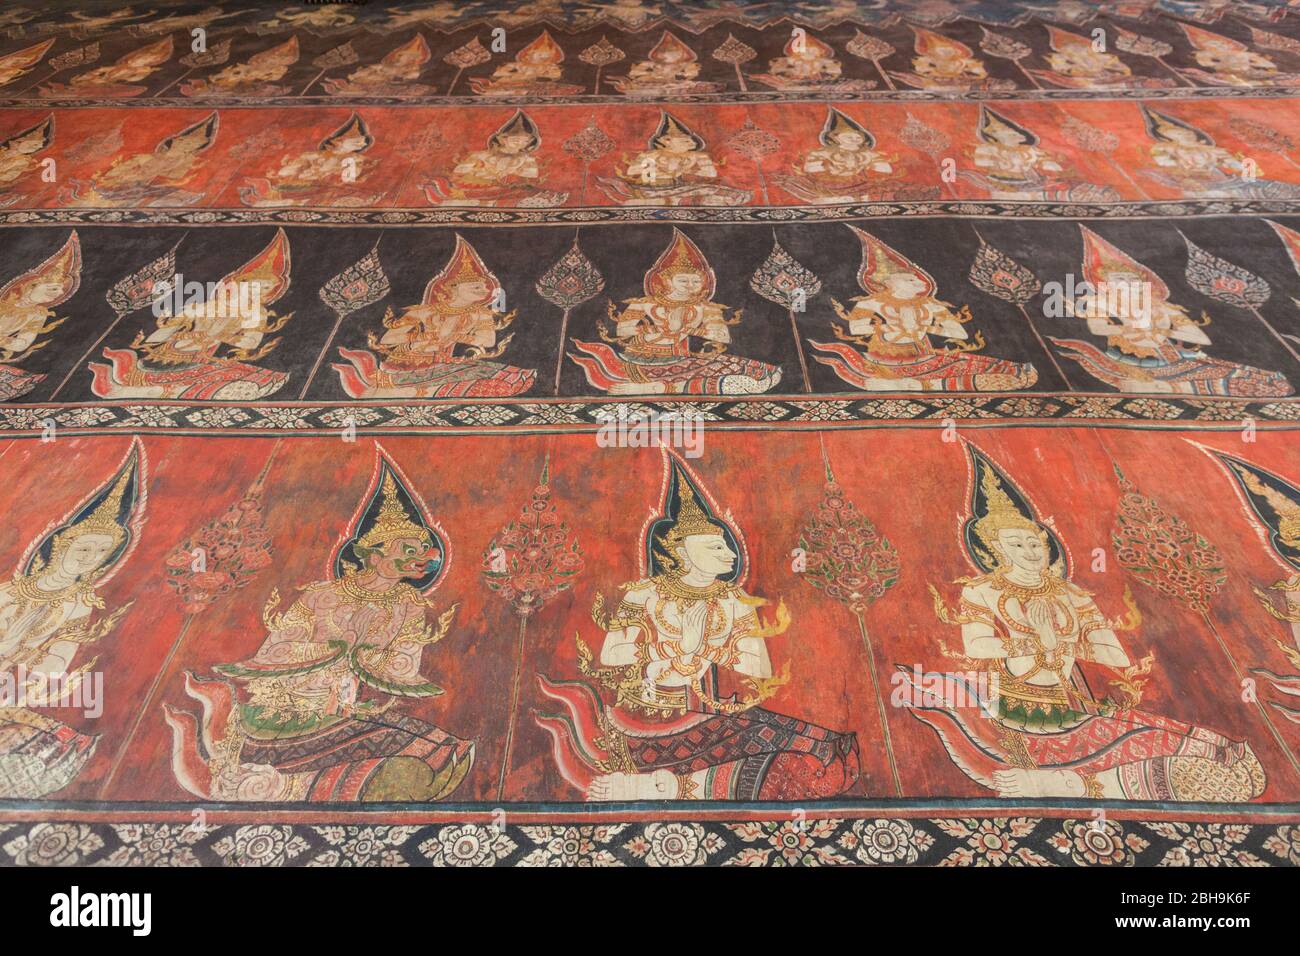 Thailandia, Bangkok, Museo Nazionale di Bangkok, Cappella Buddaisawa, Phra Buddha Sihing, decorazioni murali Foto Stock